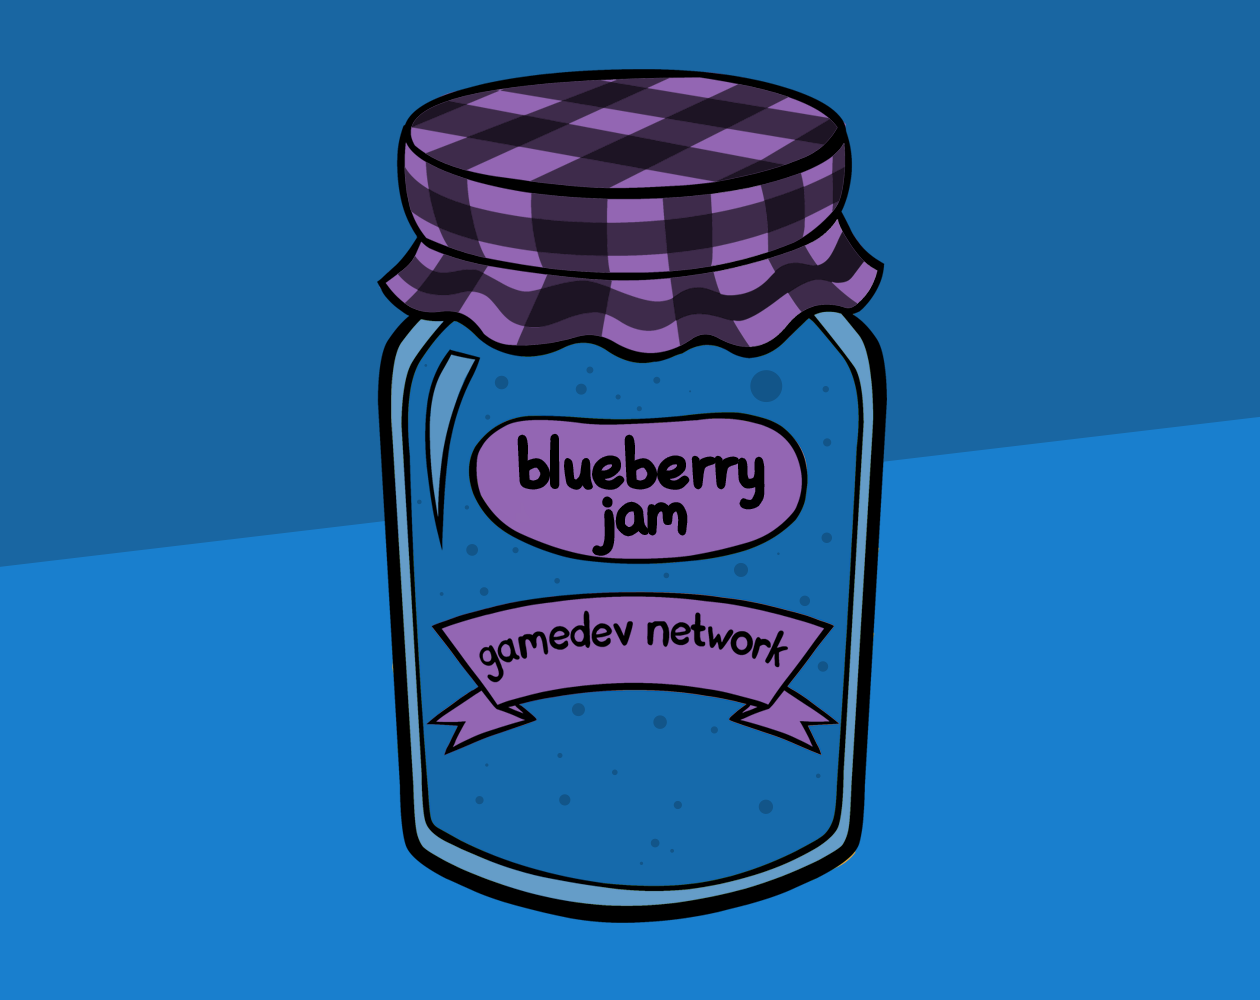 Gamedevnetwork blueberry jam.